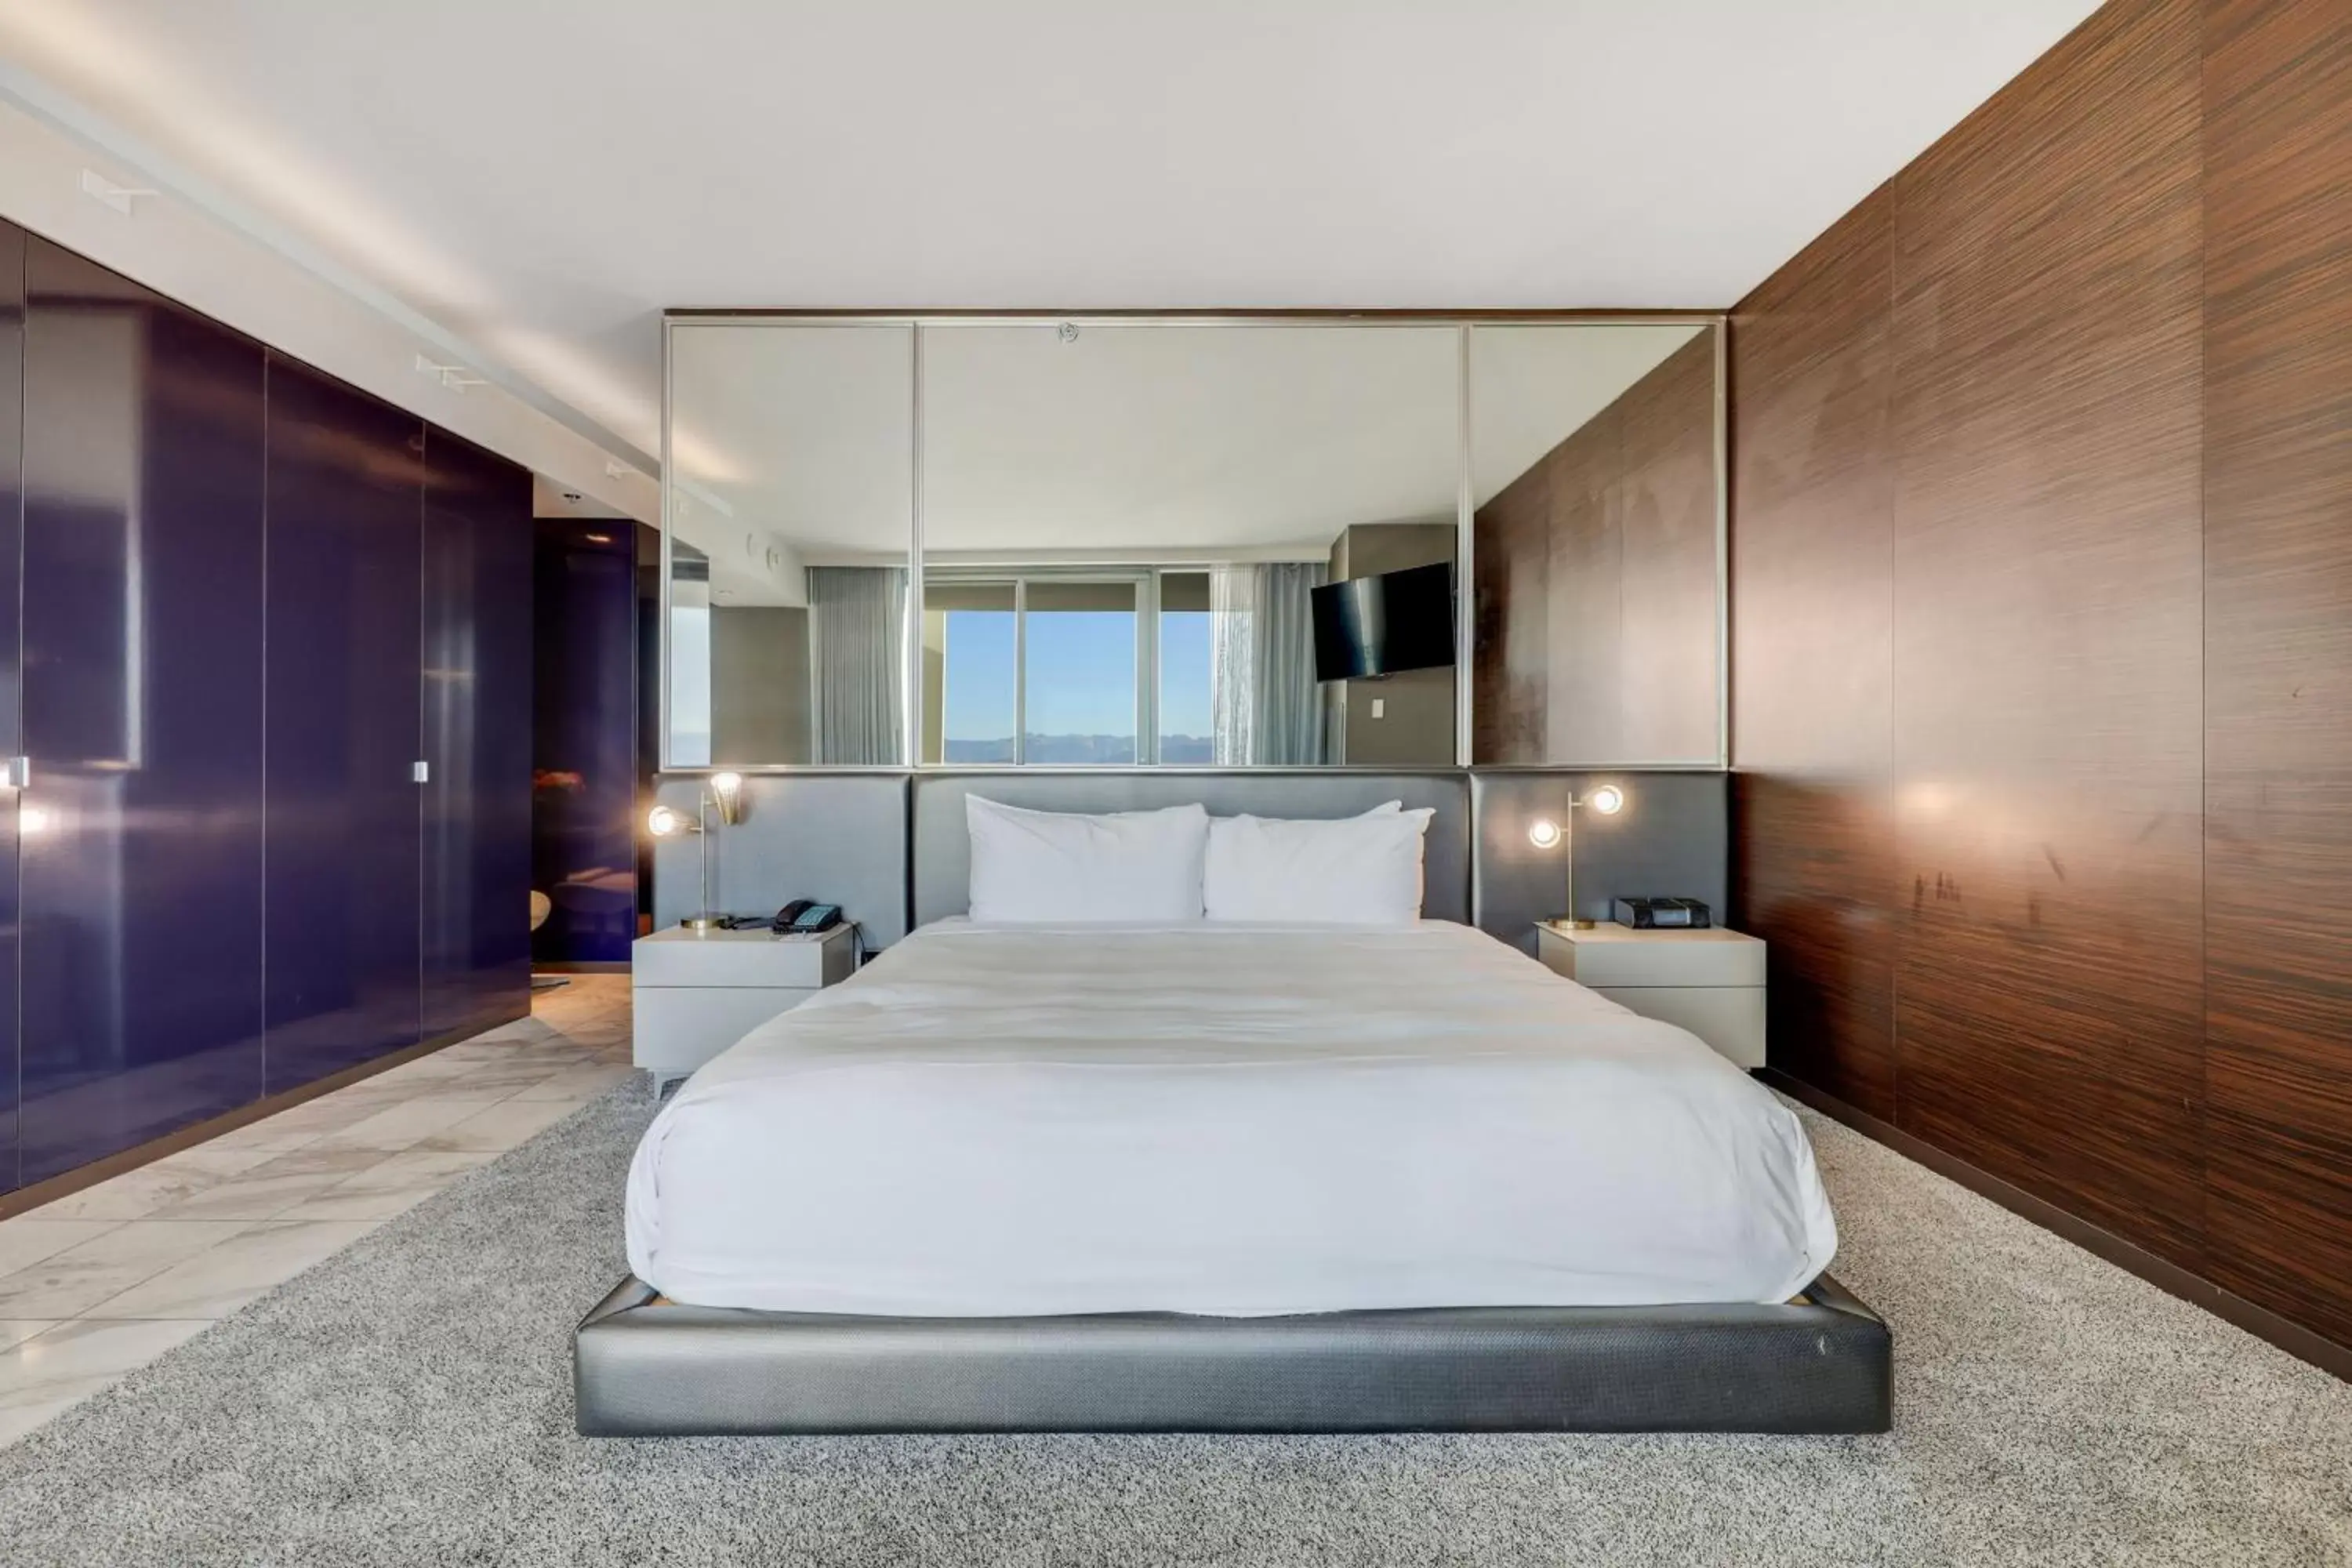 Bed in Vegas Palms HIGH 52nd fl. 1BDR corner penthouse 1220sqft